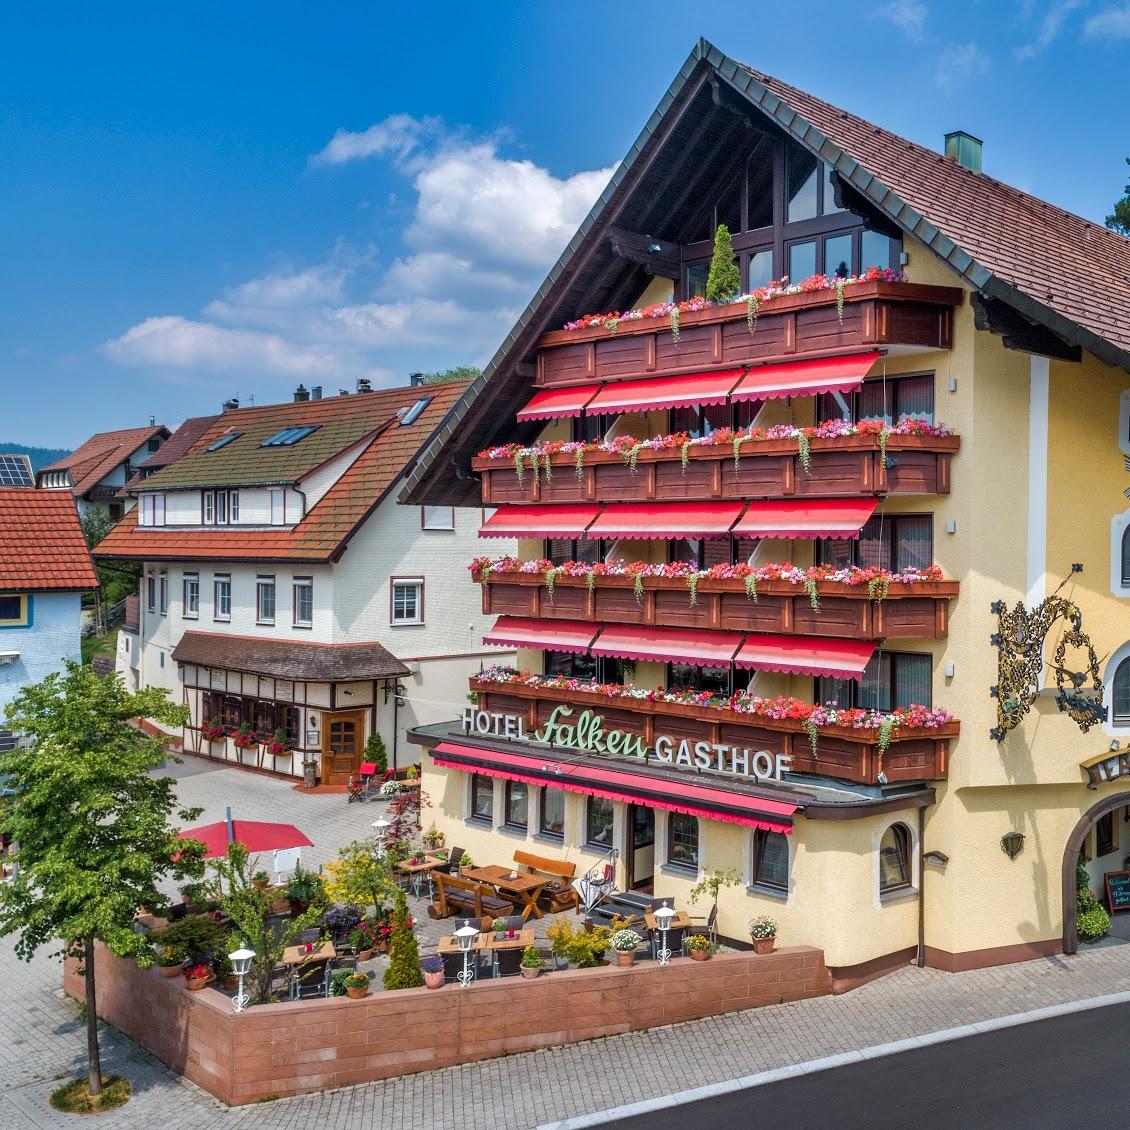 Restaurant "Hotel Gasthof Falken" in  Baiersbronn